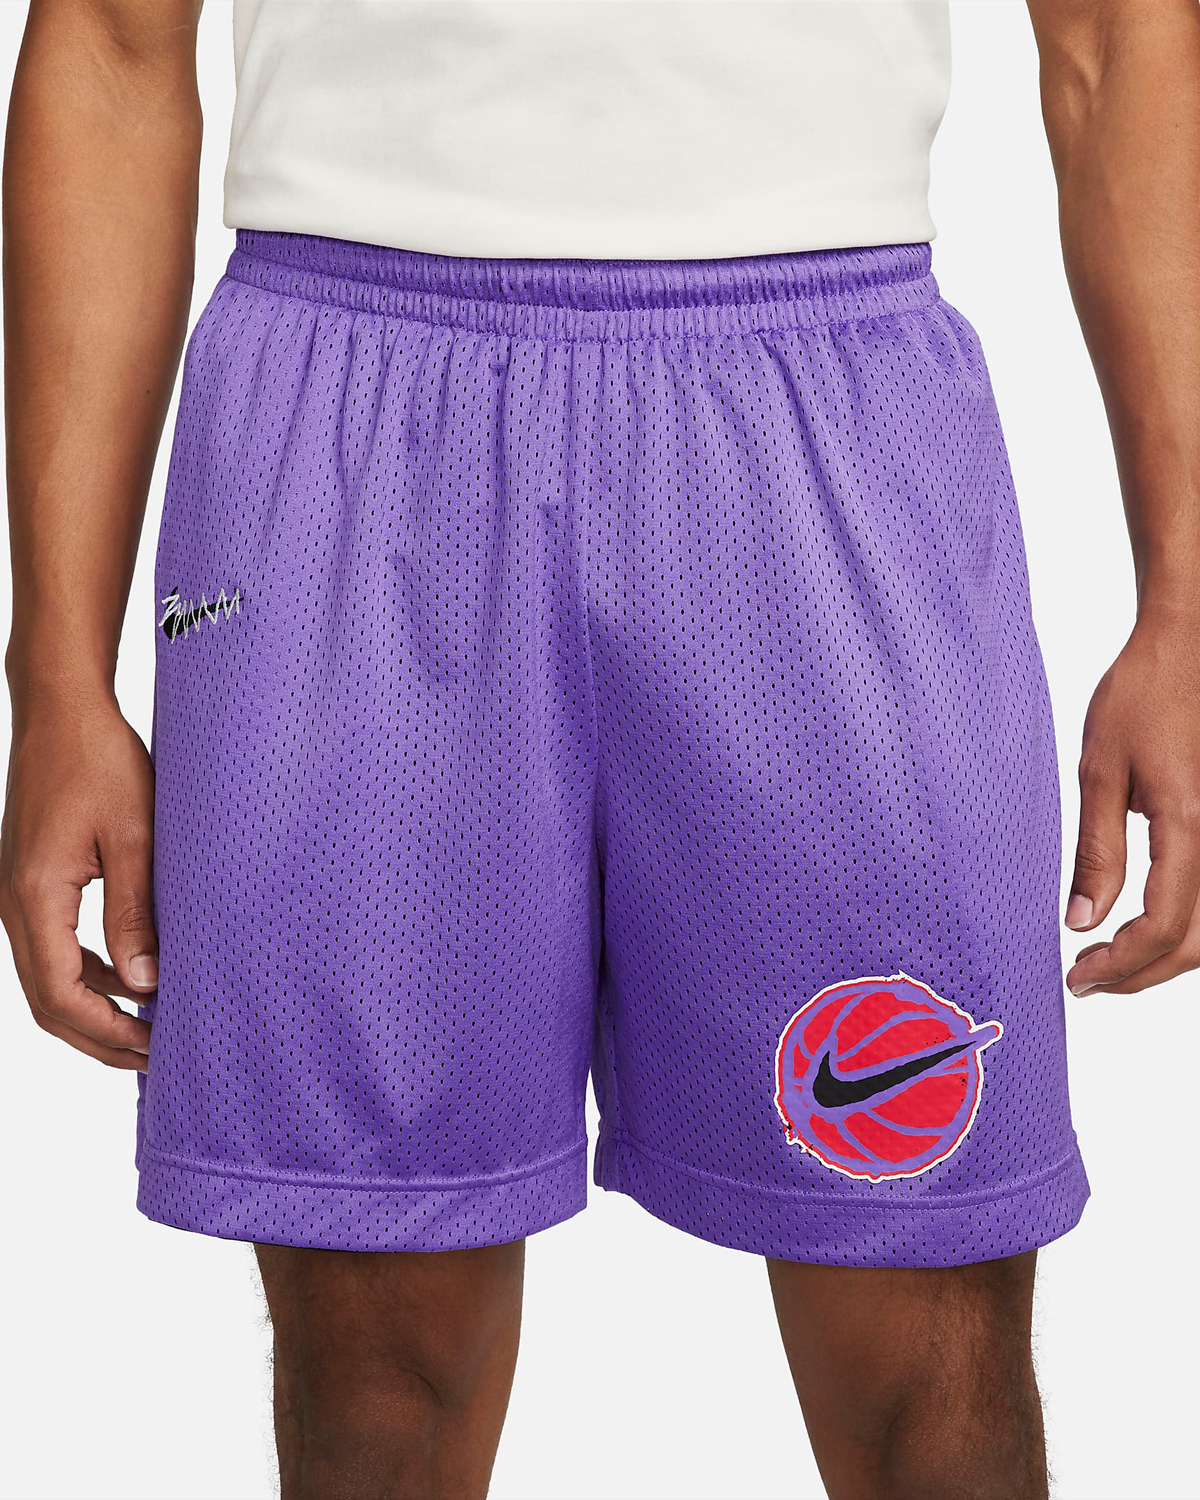 Nike-Standard-Issue-Reversible-Basketball-Shorts-Court-Purple-Black-1